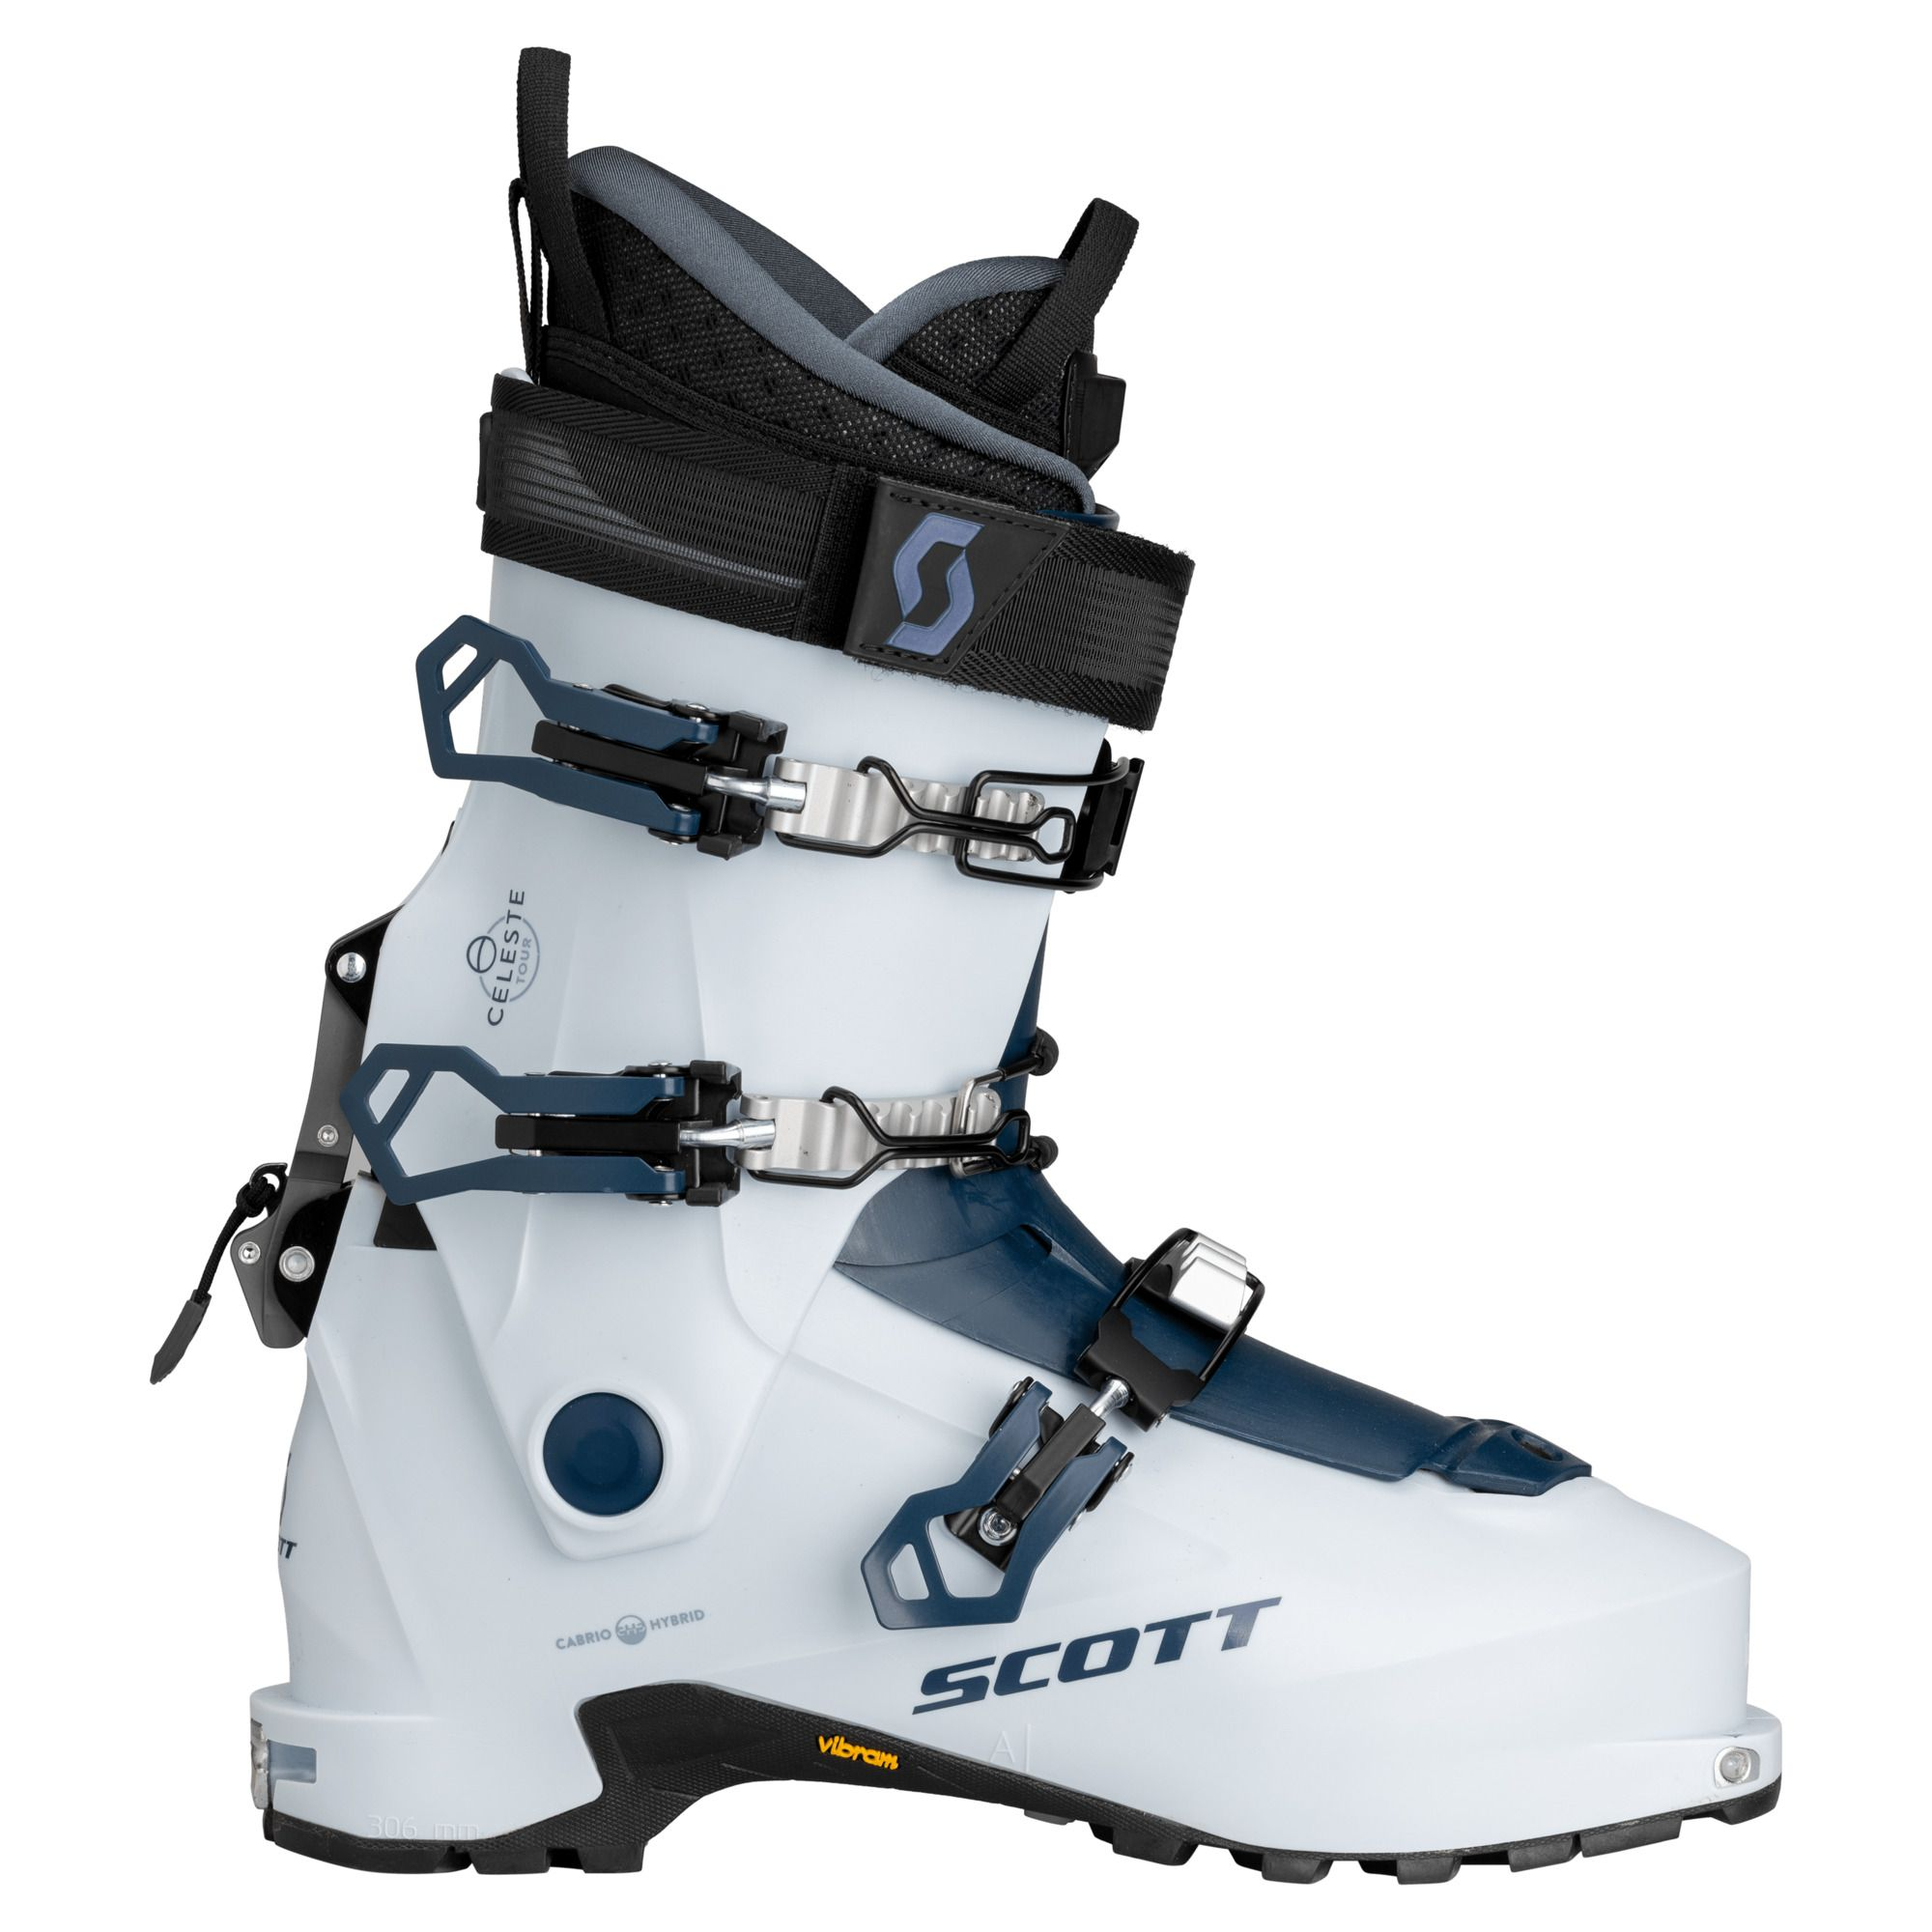 Chaussure de Ski de radonnée W's Celeste